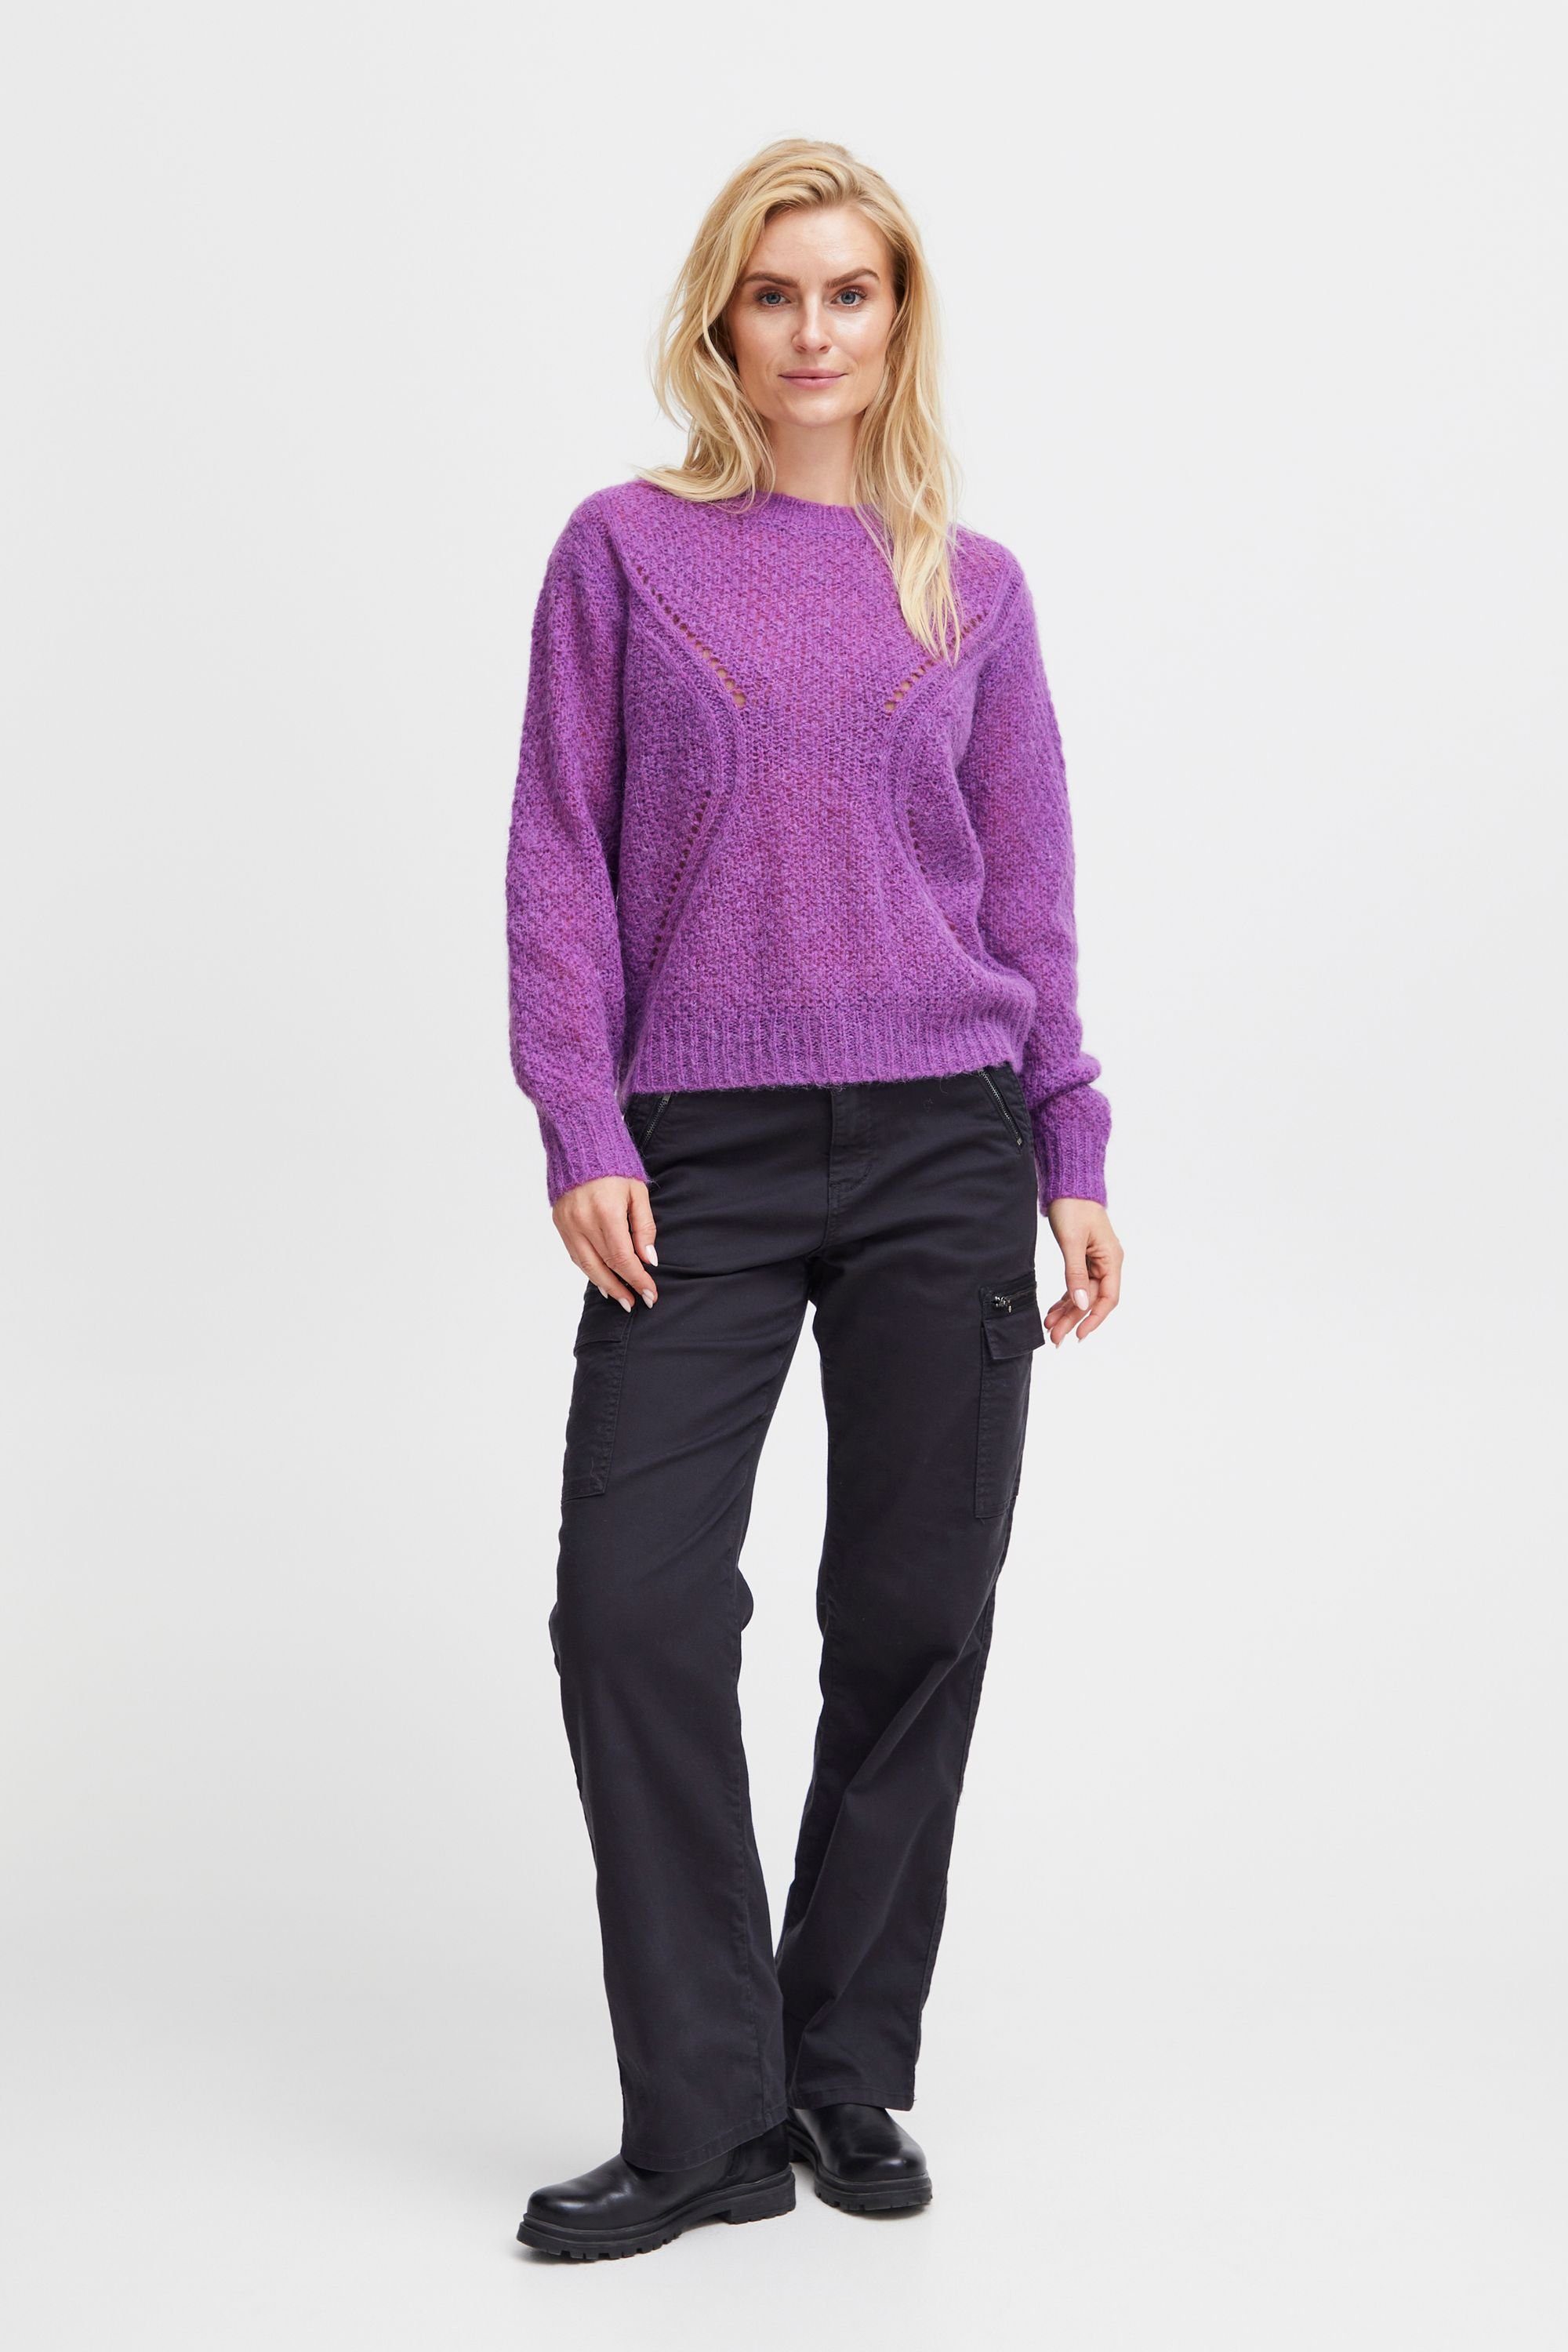 PZIRIS Jeans Purple (202347) Pulz Melange Strickpullover Bright Pattern Pullover